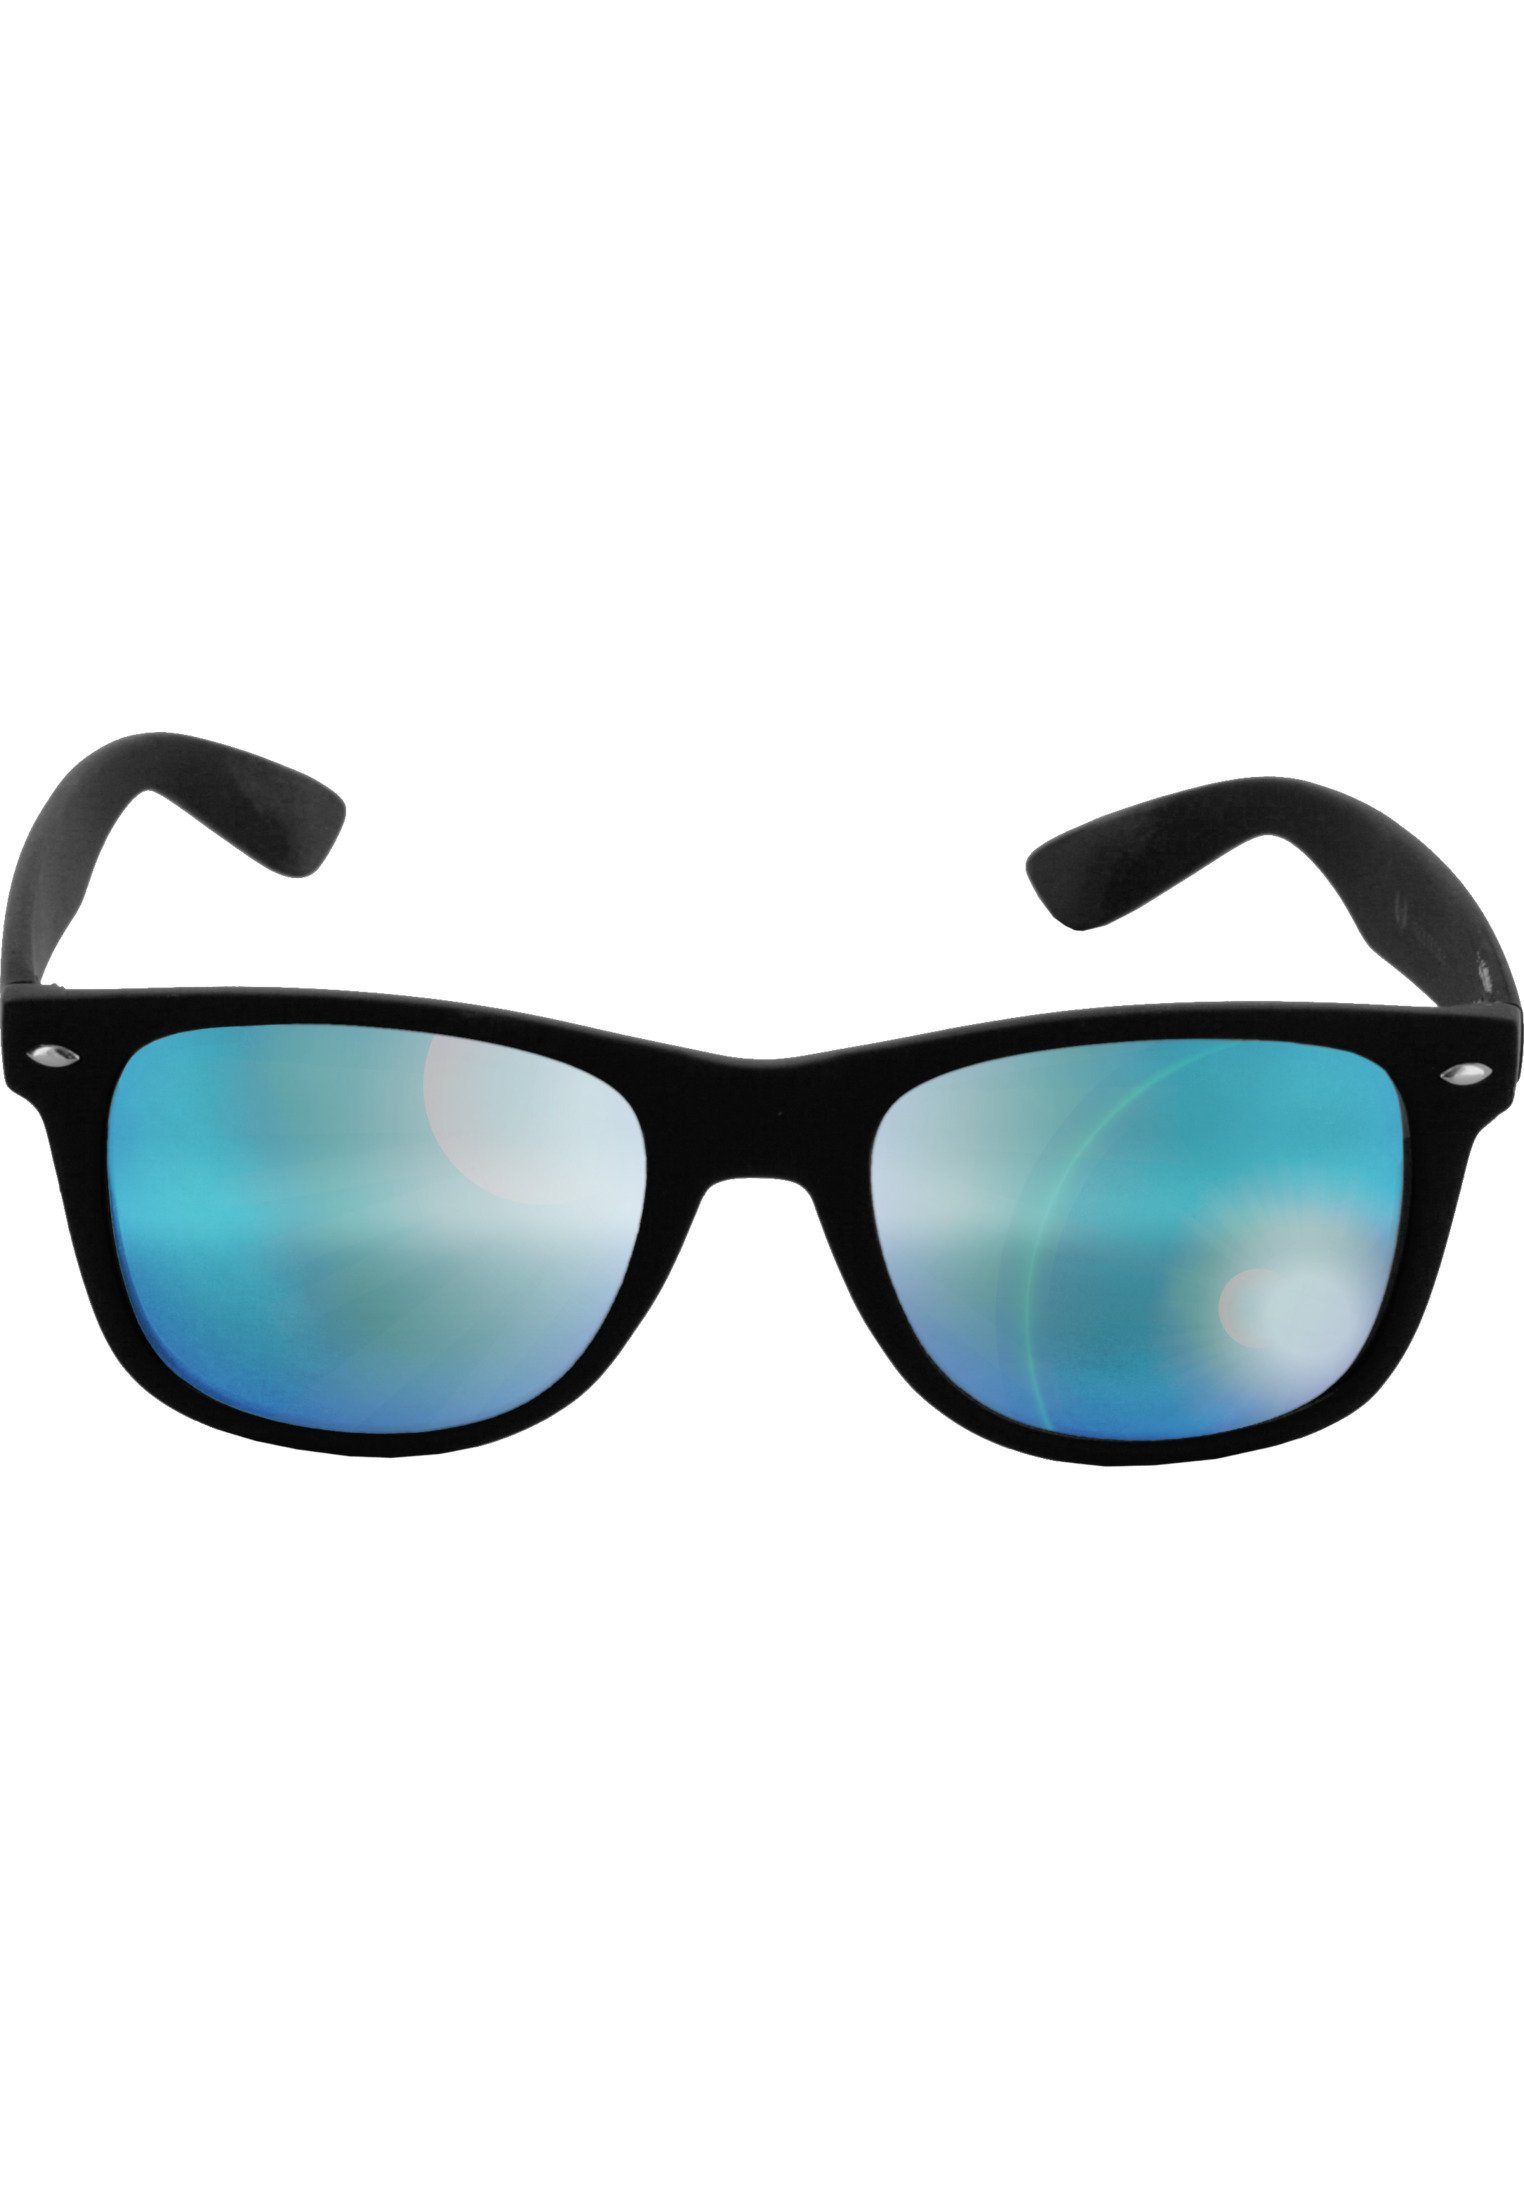 Sunglasses Accessoires blk/blue Mirror MSTRDS Likoma Sonnenbrille